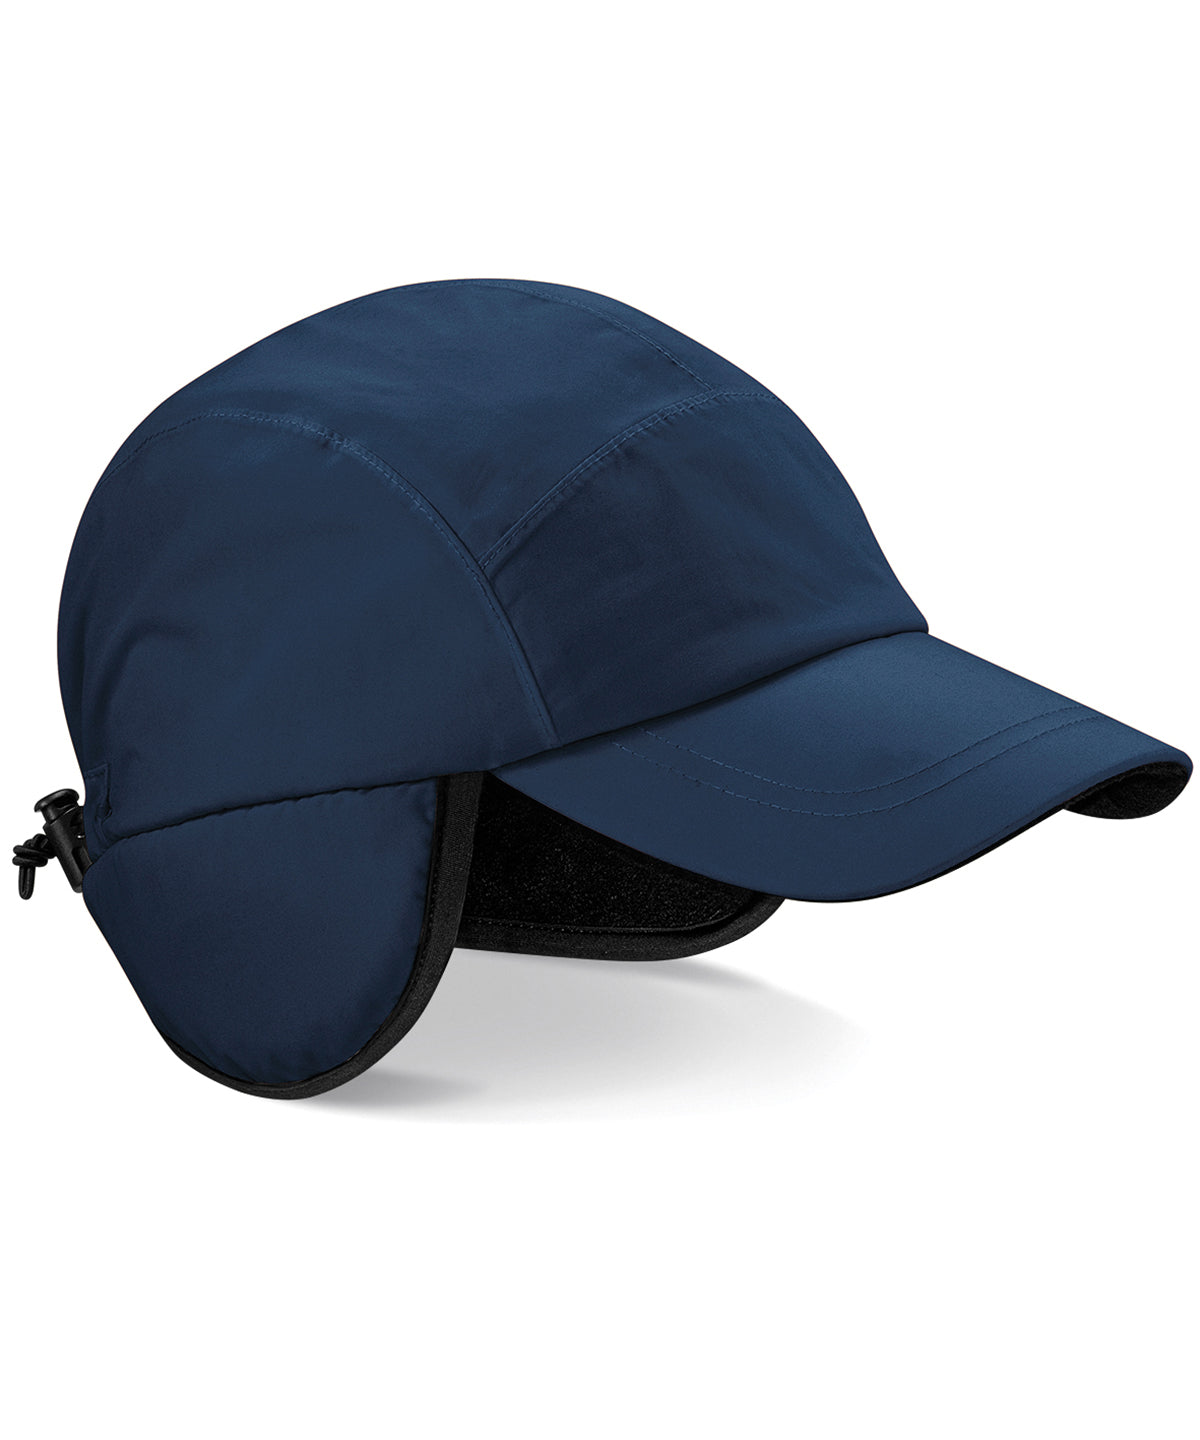 Personalised Caps - Navy Beechfield Mountain cap